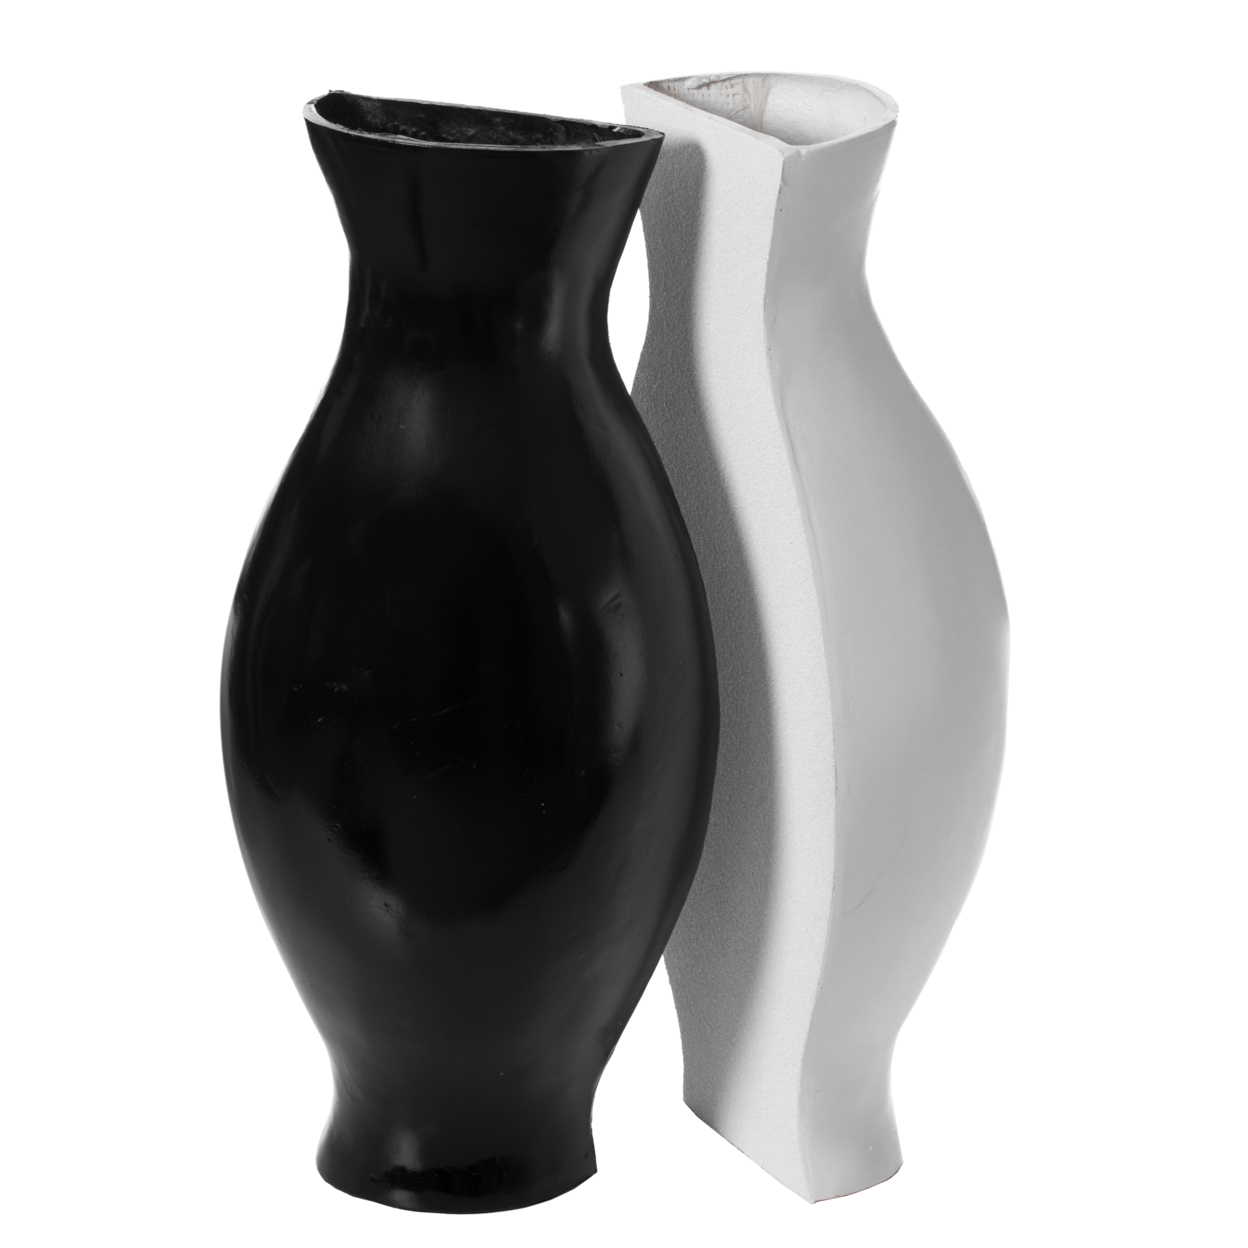 Tall Narrow Vase, Sleek Split Vase, Modern Floor Vase, Decorative Gift, Vase For Interior Design, 24.5 Inch Vase - Set Of 2 Black